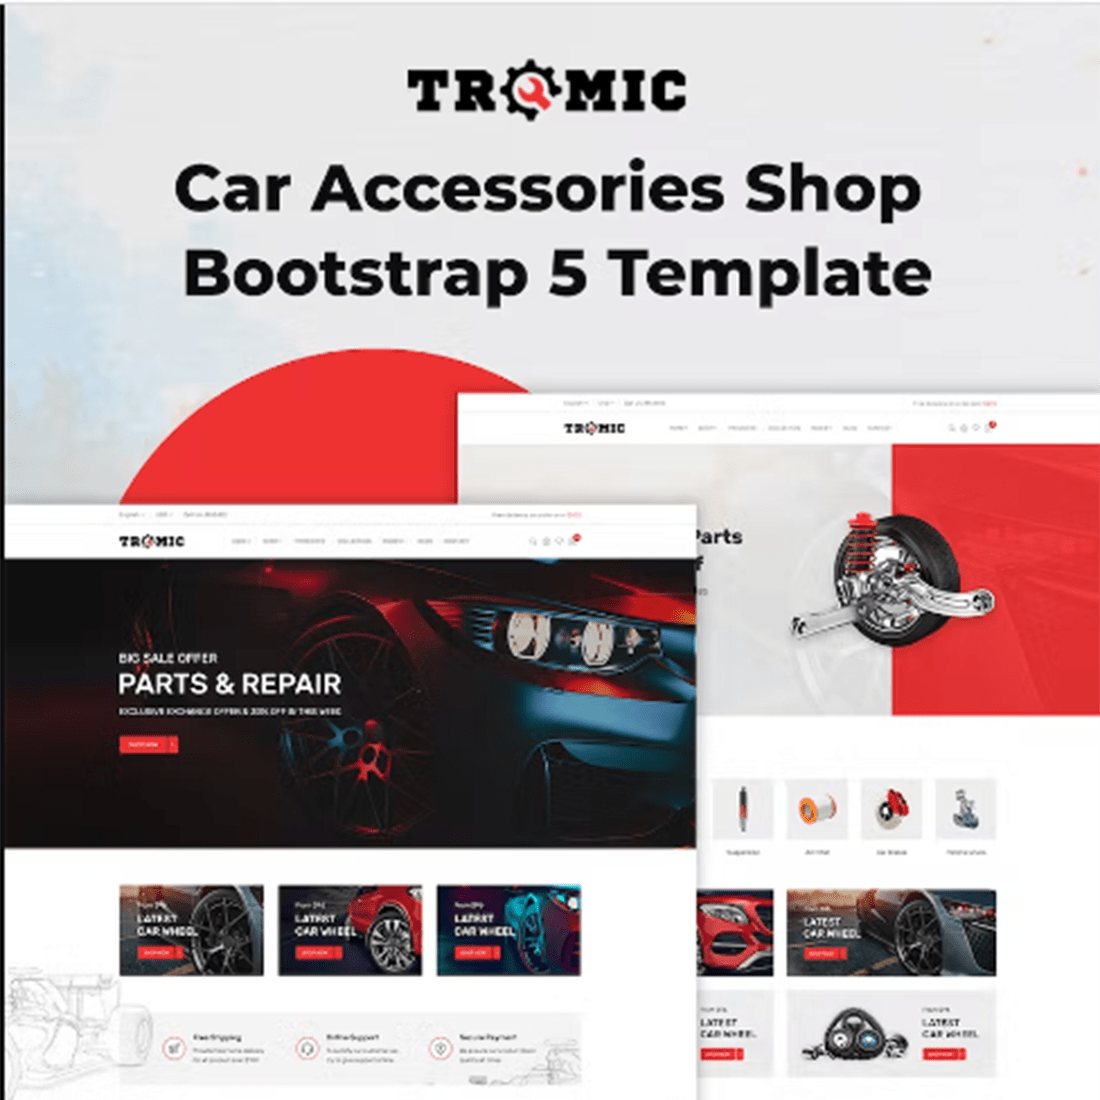 Tromic Car Accessories Shop Bootstrap 5 Template preview image.